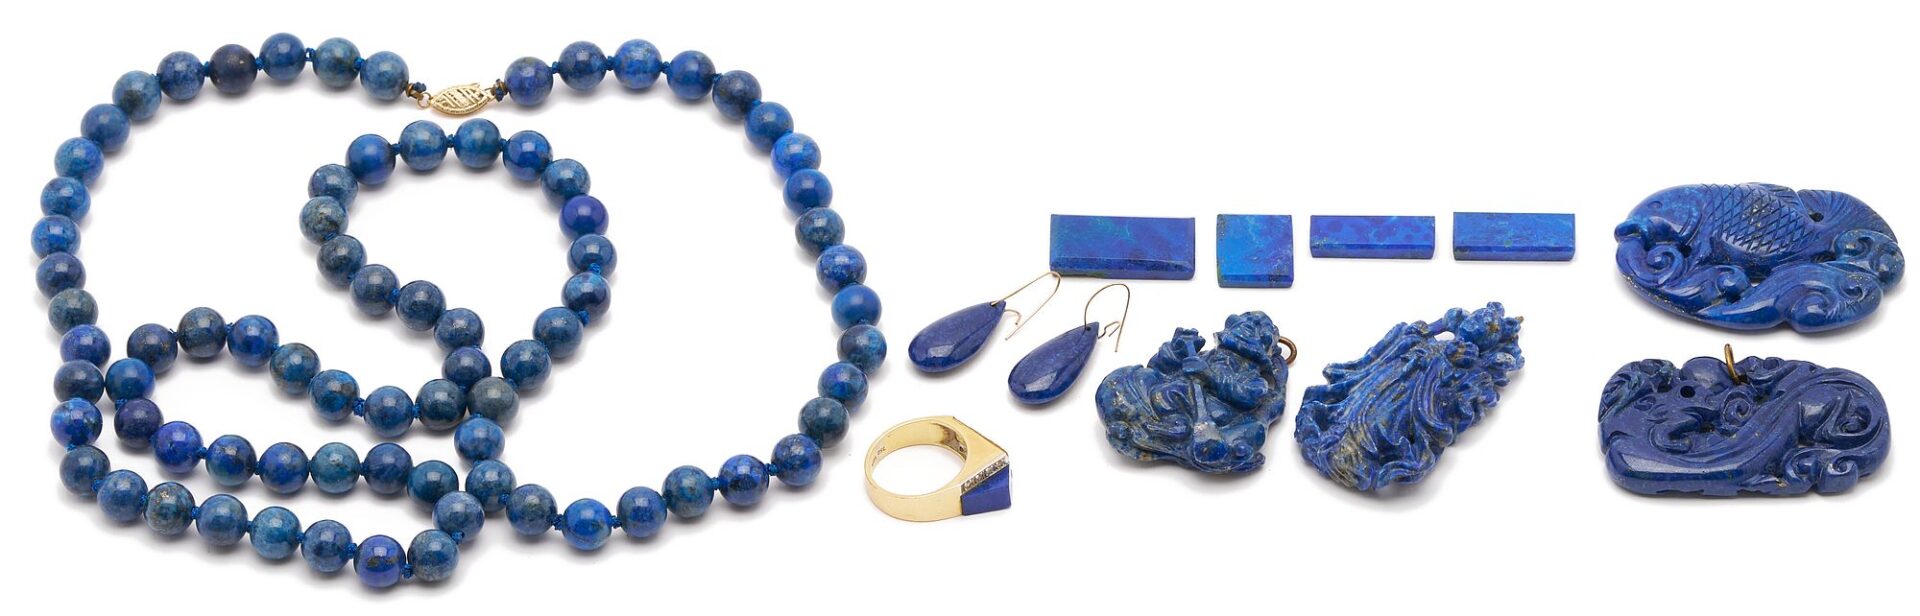 Lot 34: Lapis Beads, 18K Ring, Pendants and Earrings